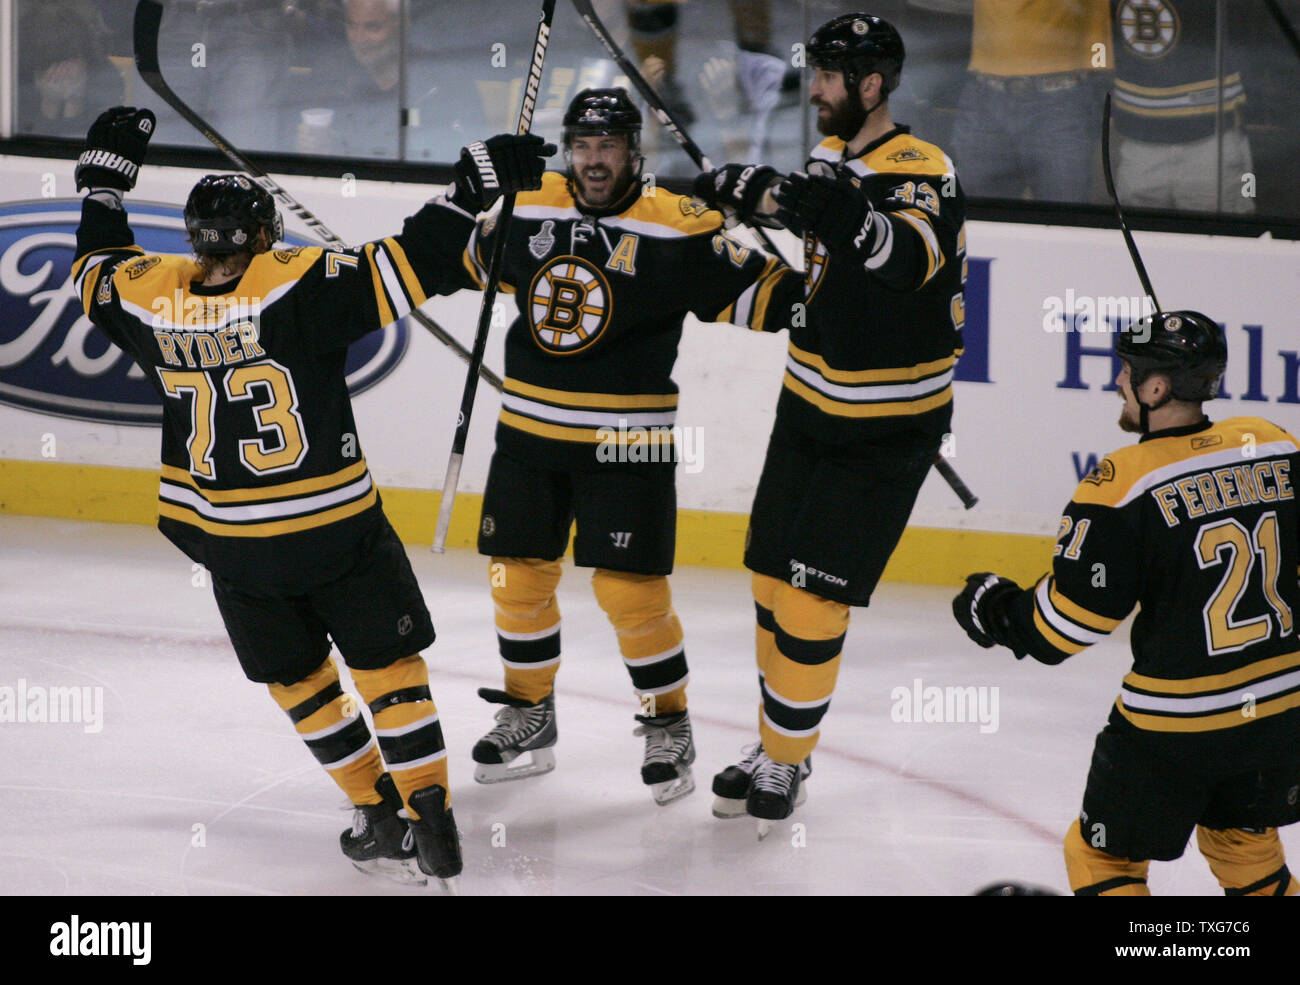 Boston Bruins on X: Fans have spoken! Mark Recchi is named